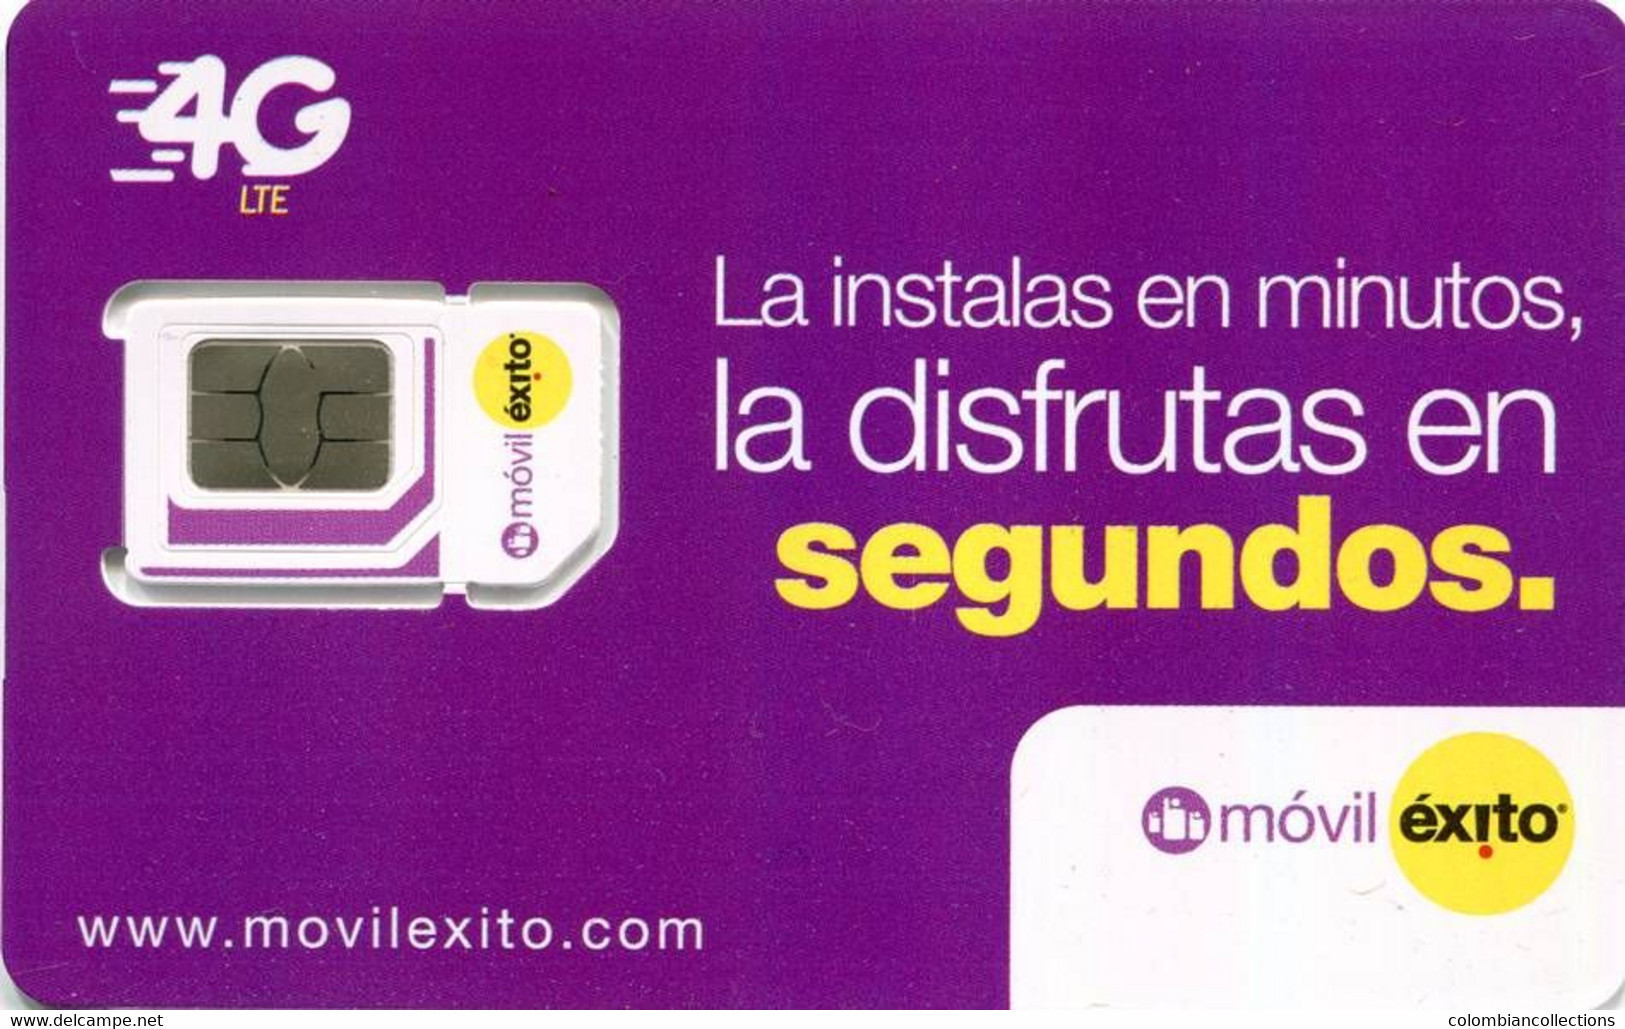 Lote TT241, Colombia, Tarjeta Telefonica, Phone Card, SIM Card Prepago, Movil Exito 4G Lite - Kolumbien